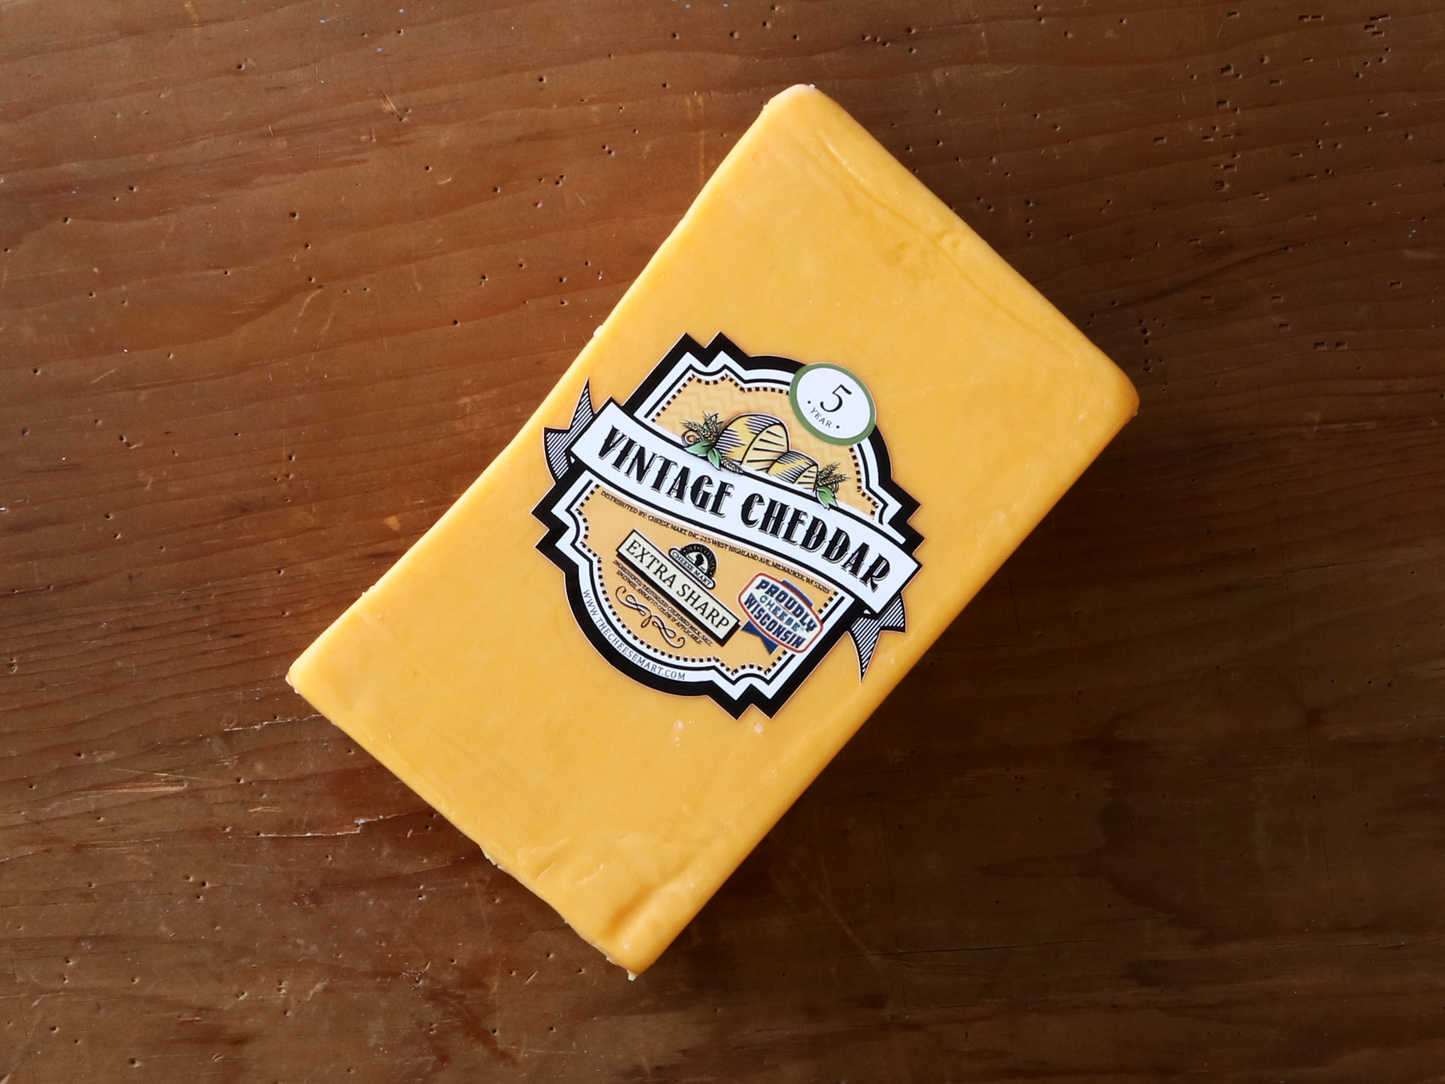 Cheddar Cheese 5 Year Vintage